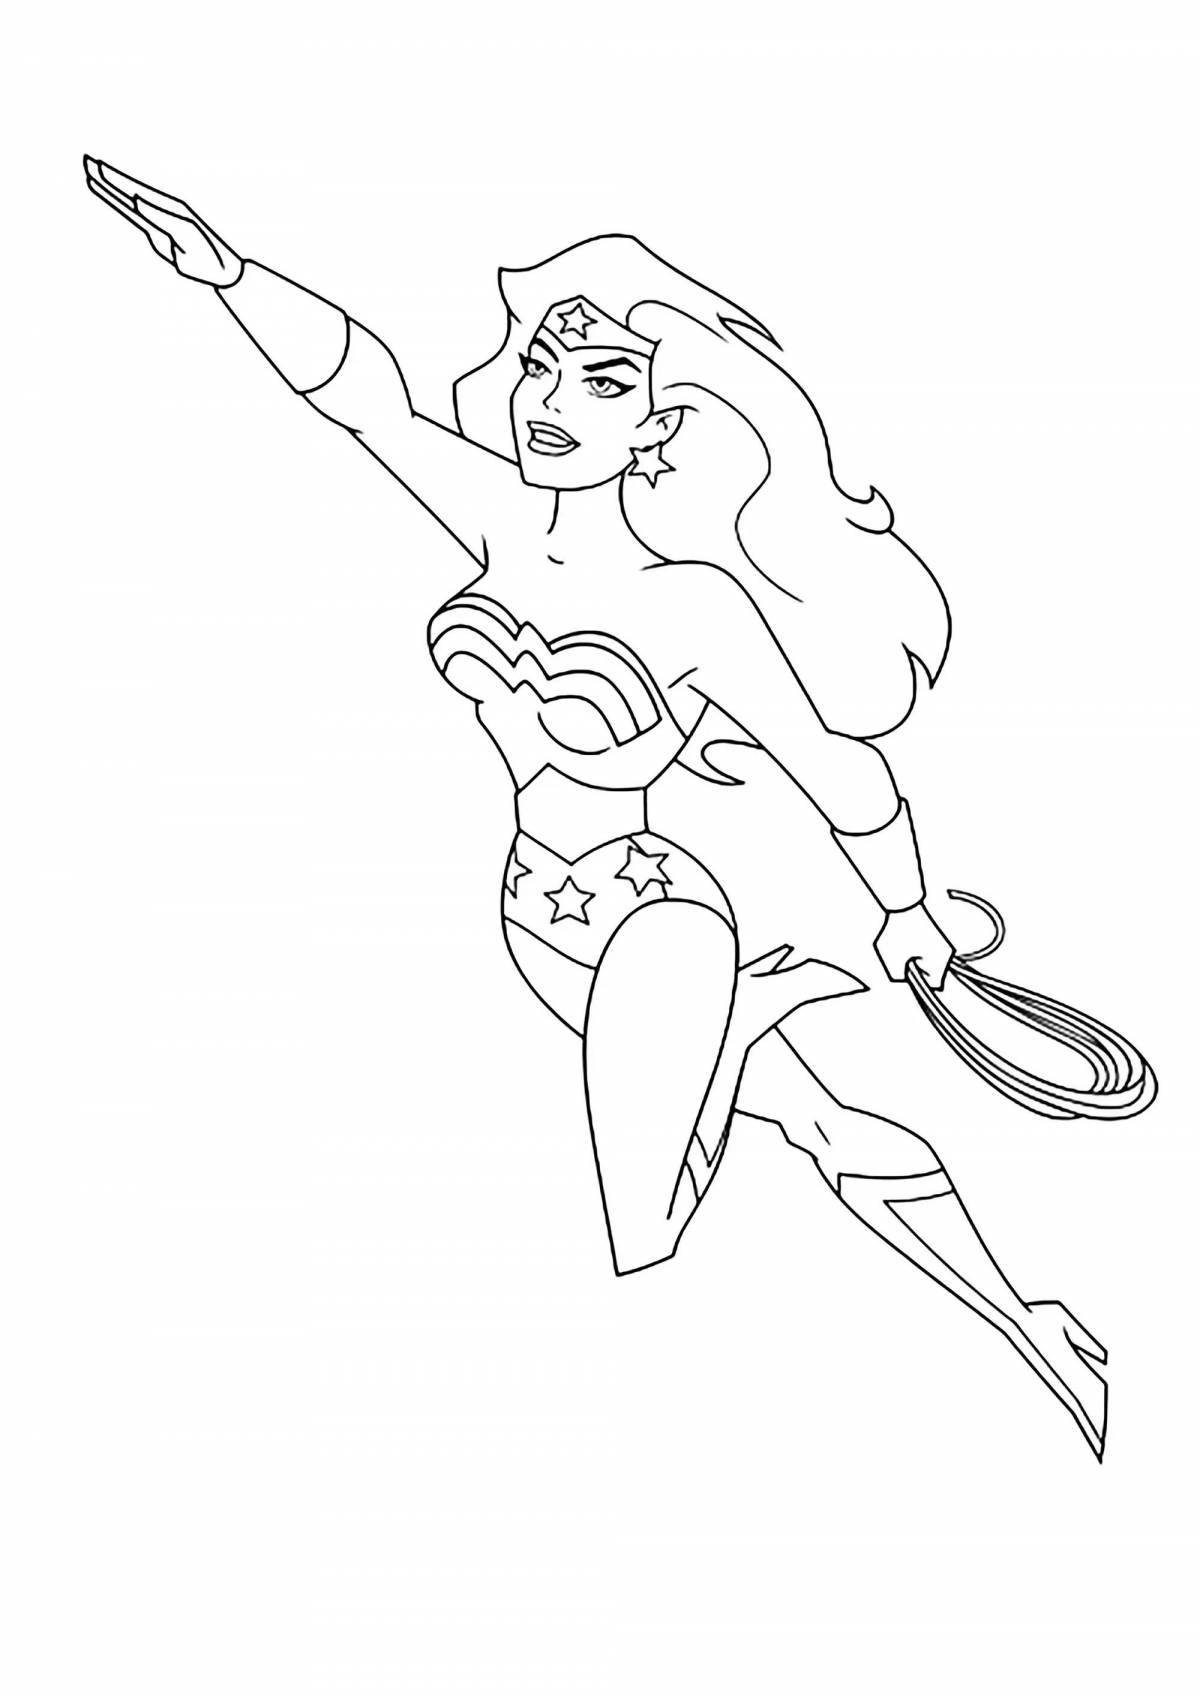 Coloring page nice superwoman